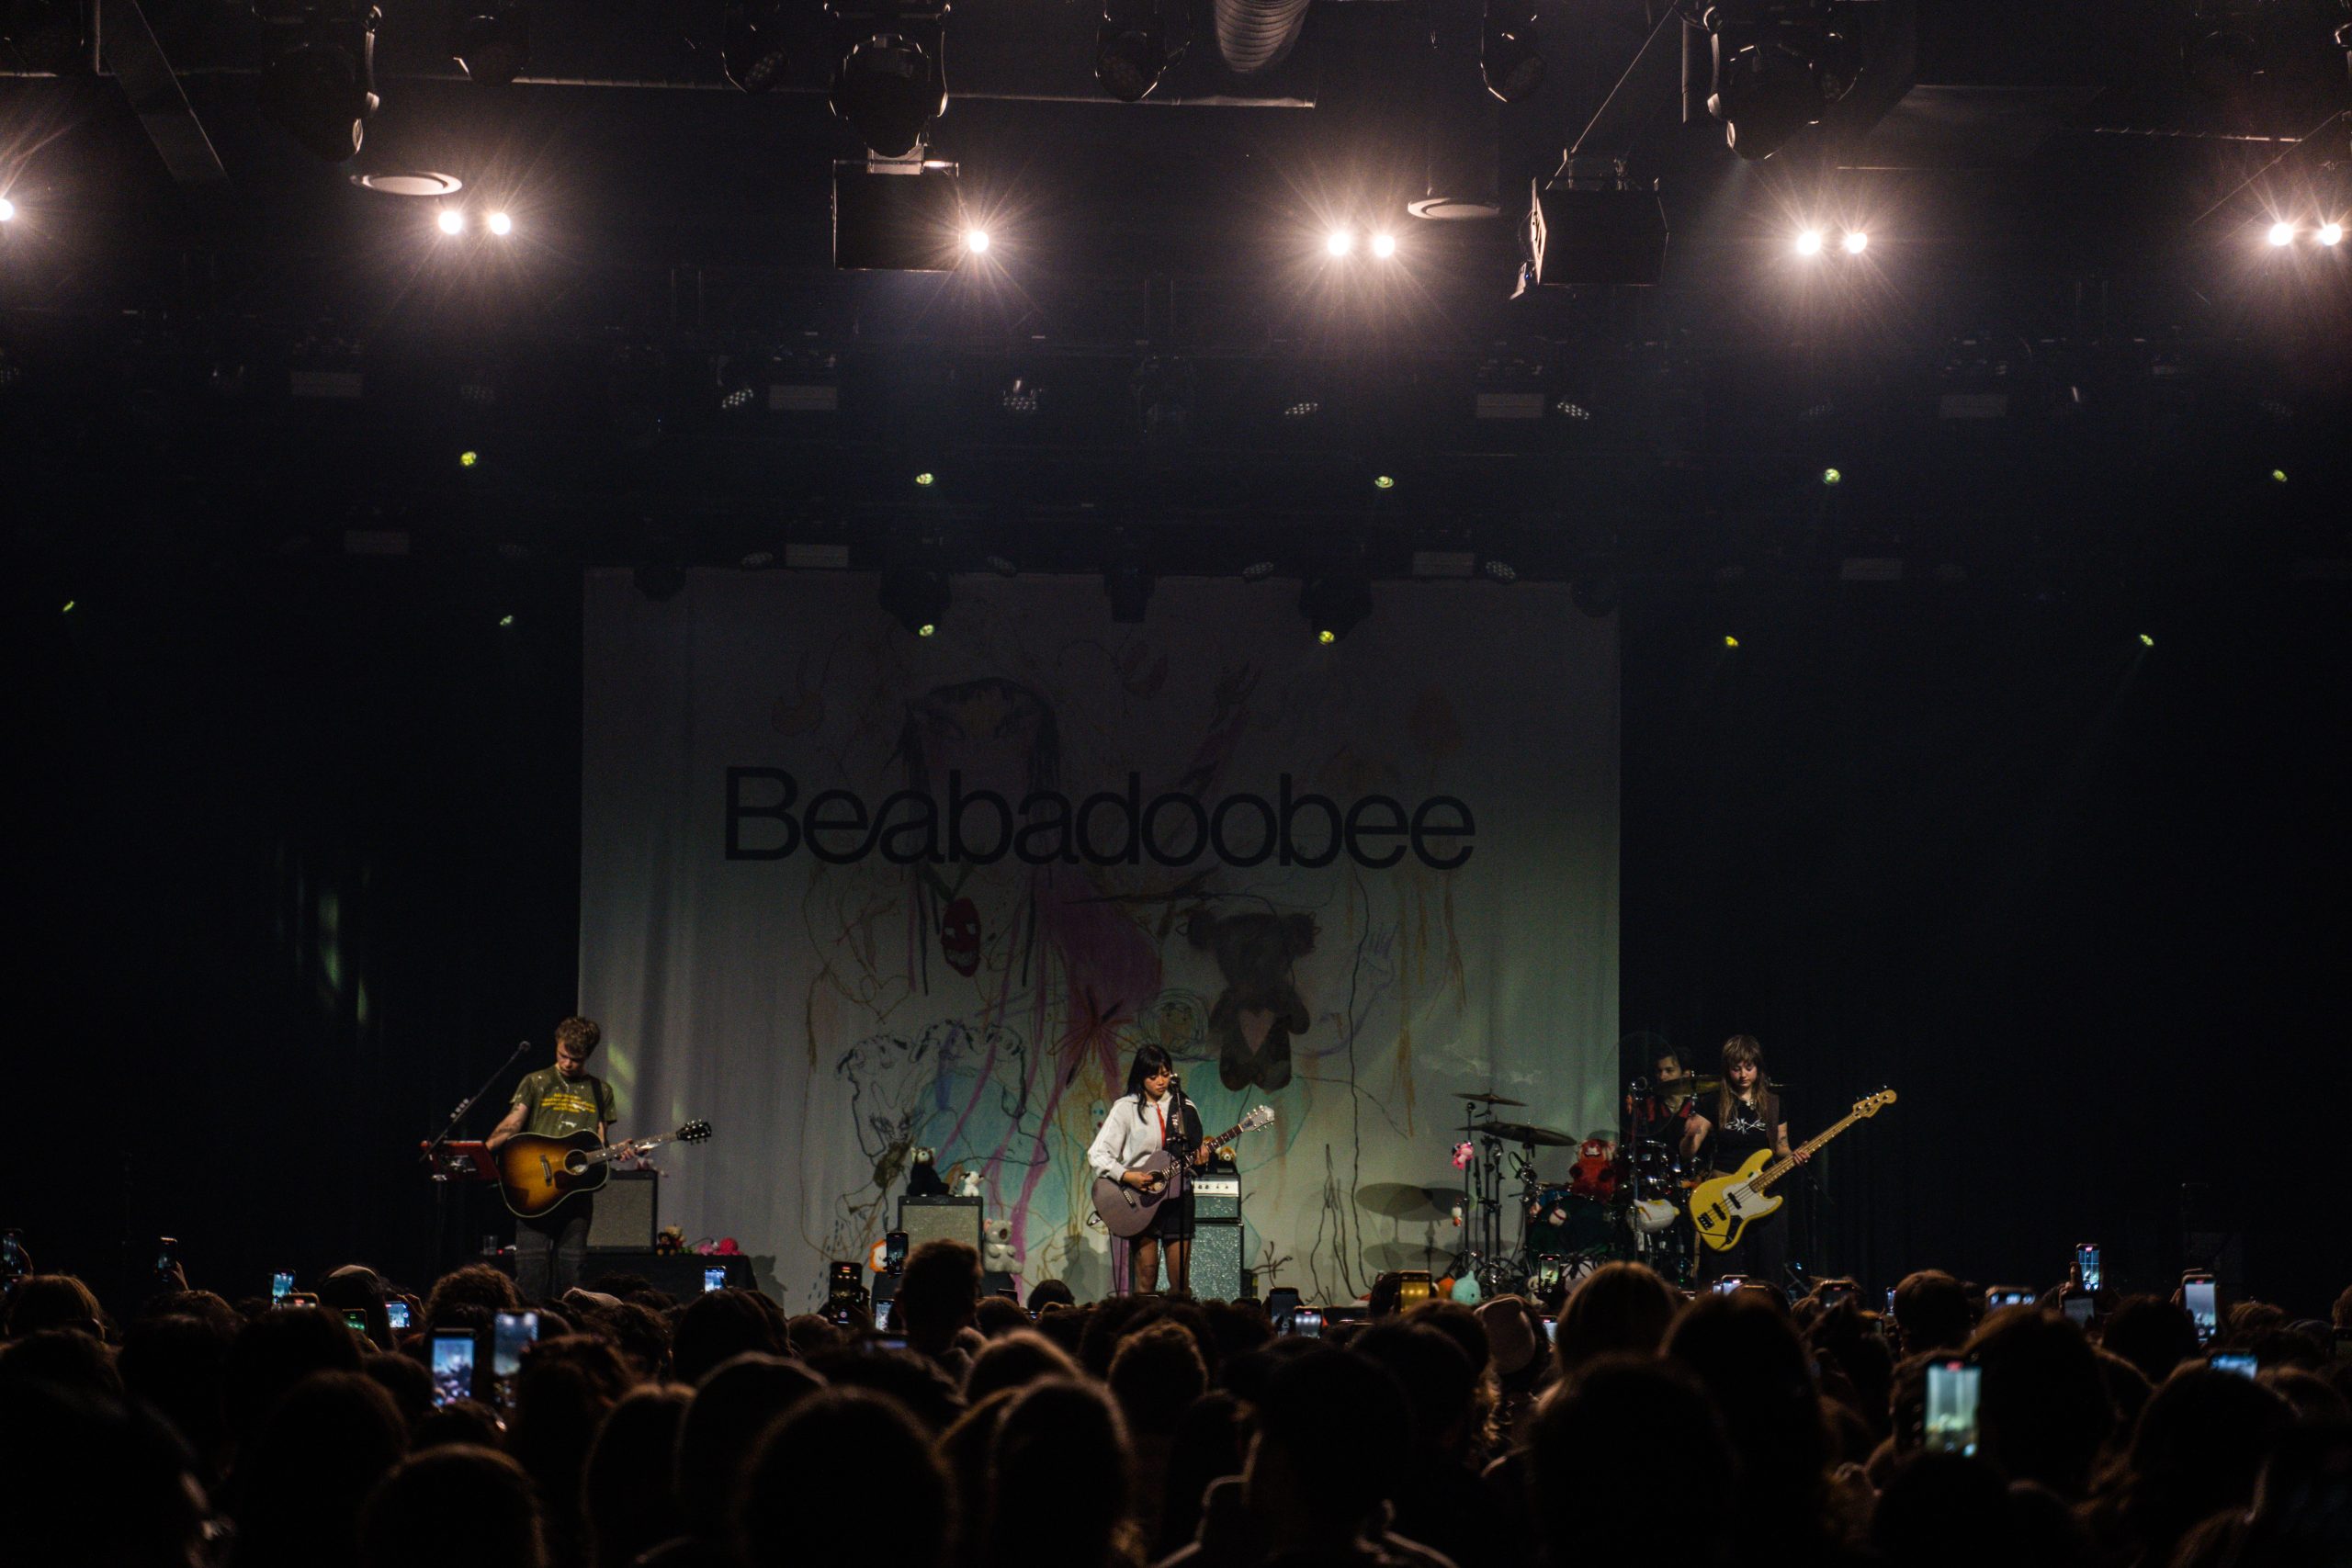 International Artist Beabadoobee Plays In Toronto During Beatopia Tour At History